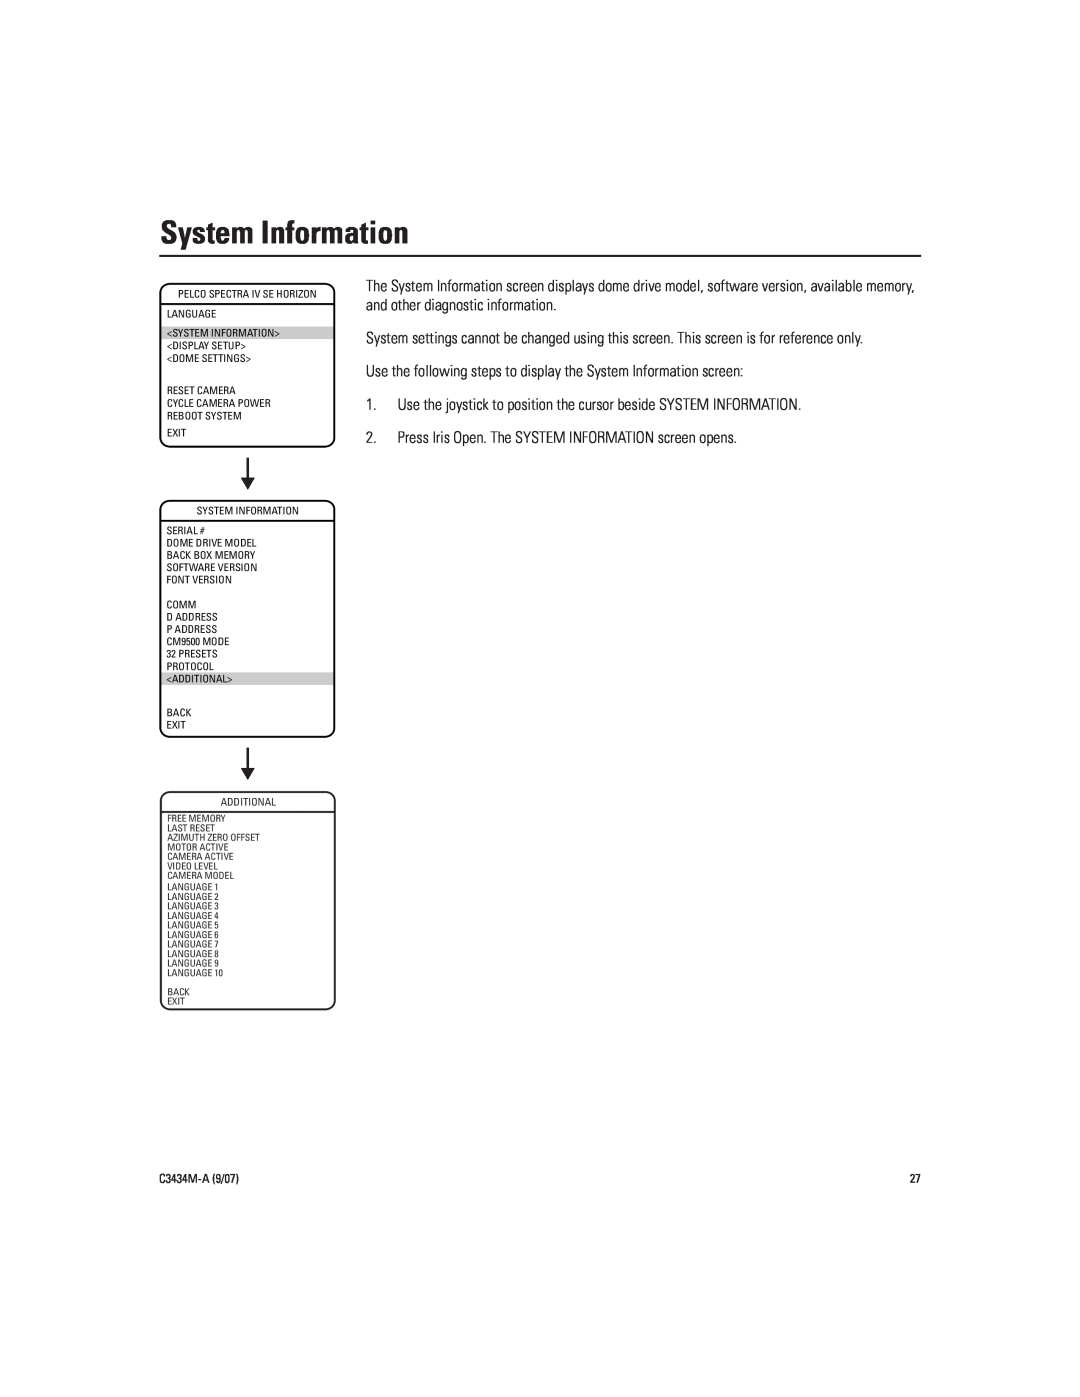 Pelco IV SE manual System Information, C3434M-A9/07 